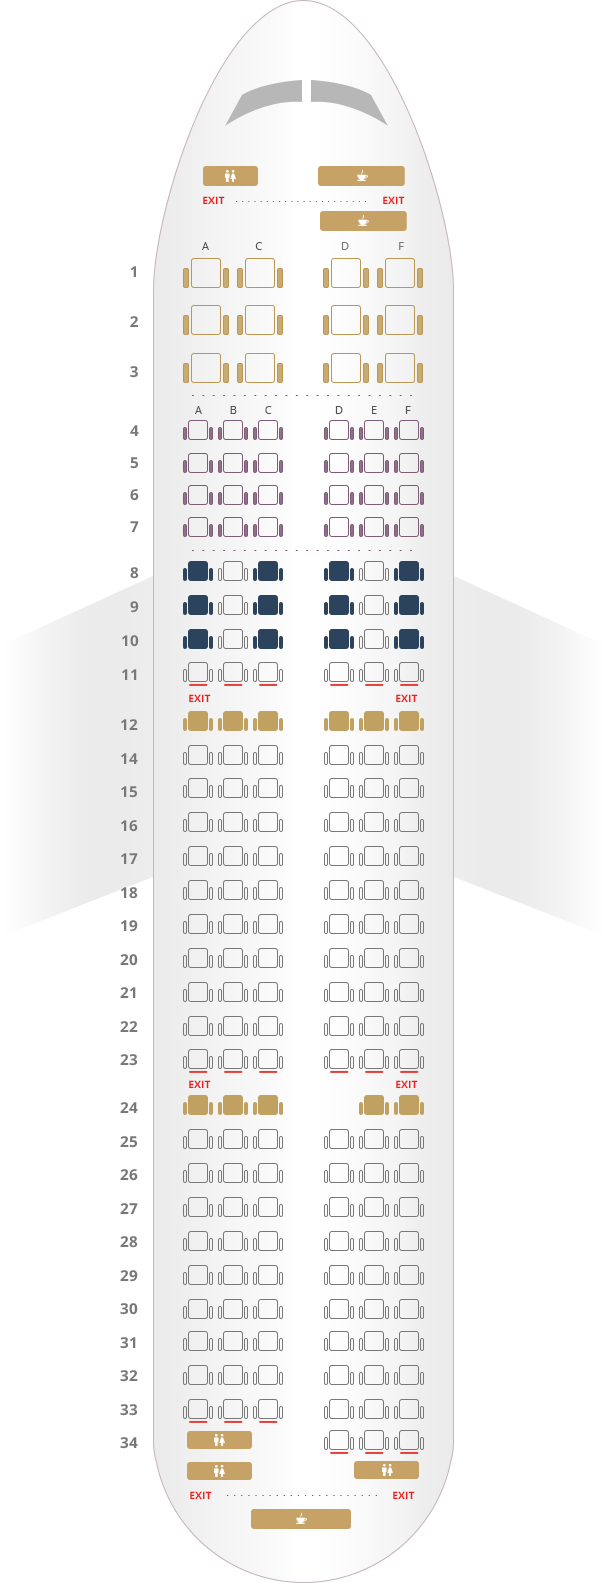 Vistara Flight Seat Map